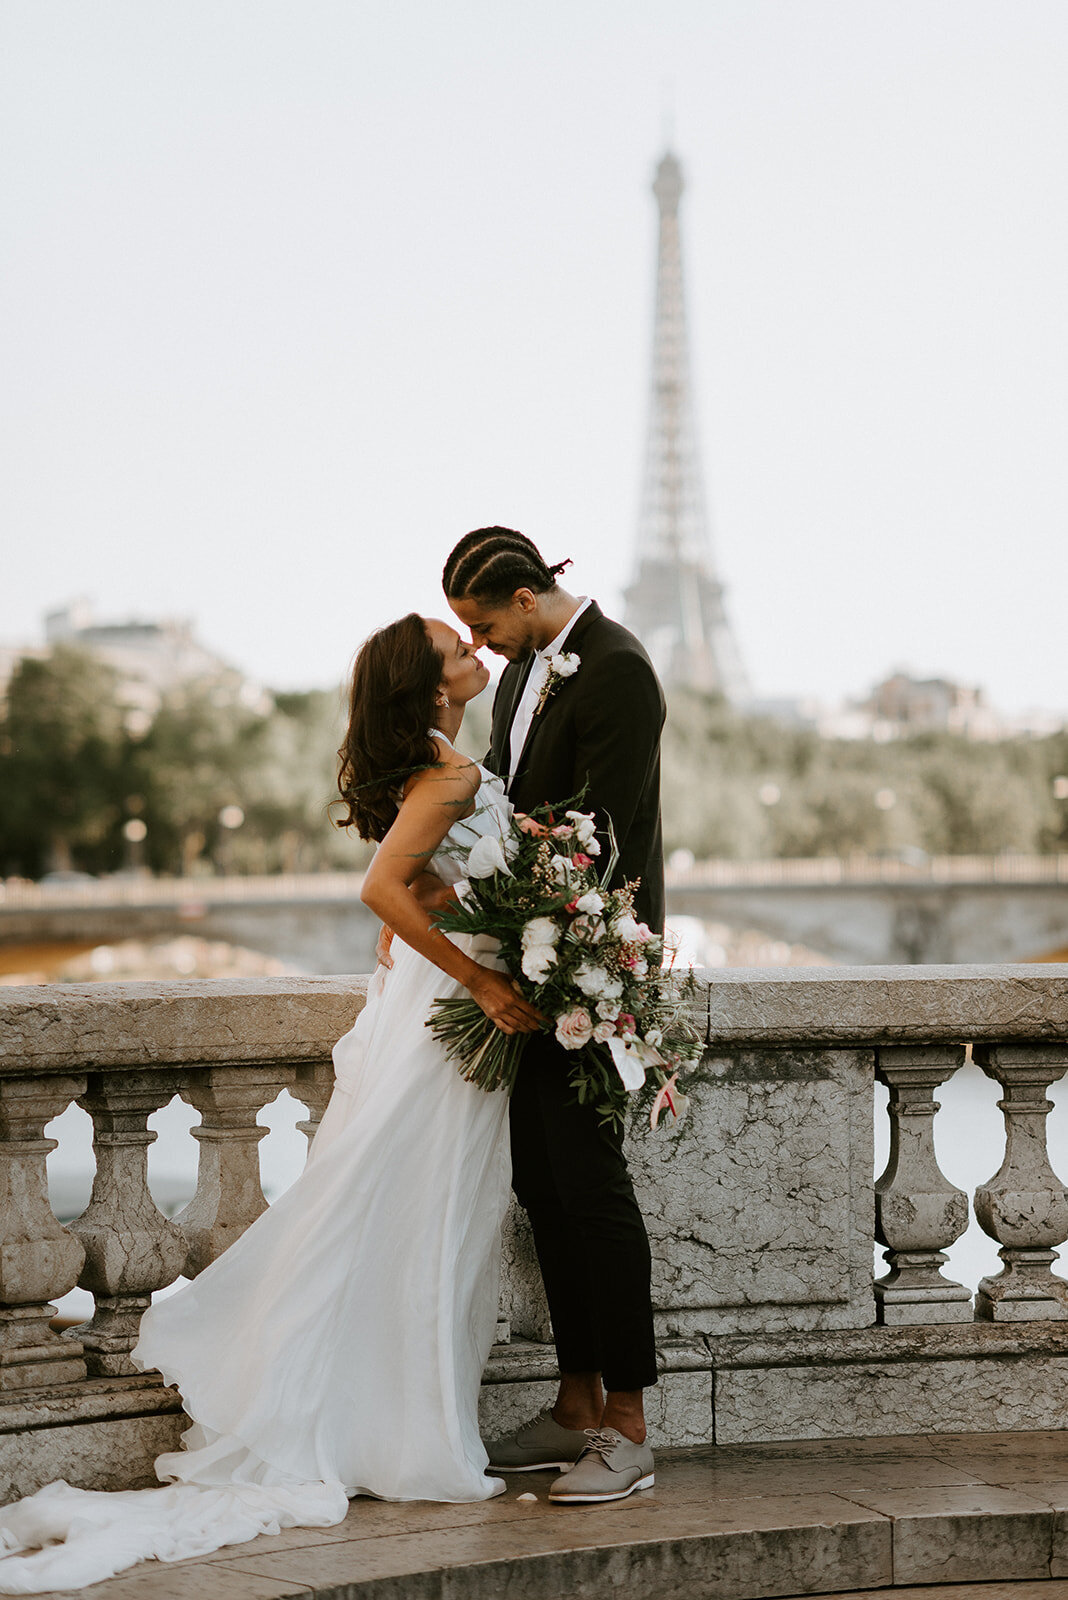 Paris-Styled-Shoot-Paris-wedding-Anais-Possamai-Photography-167